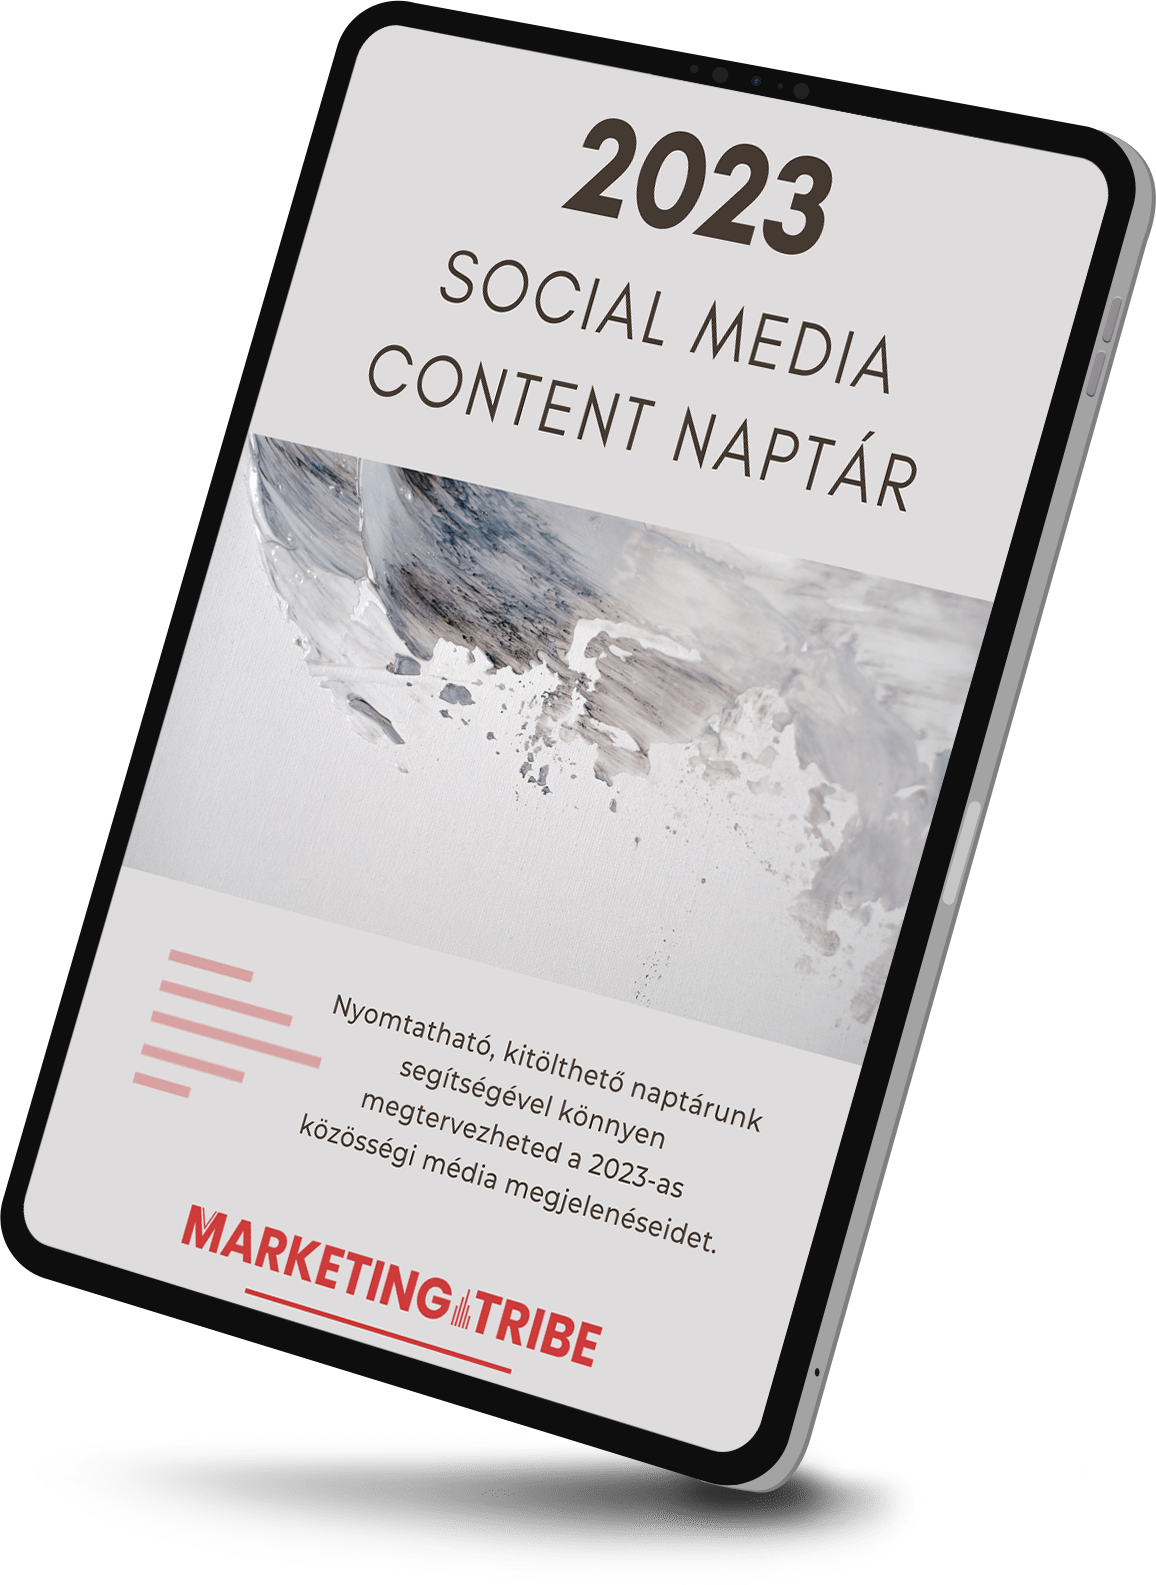 Marketing Tribe Social Media Content Calendar
